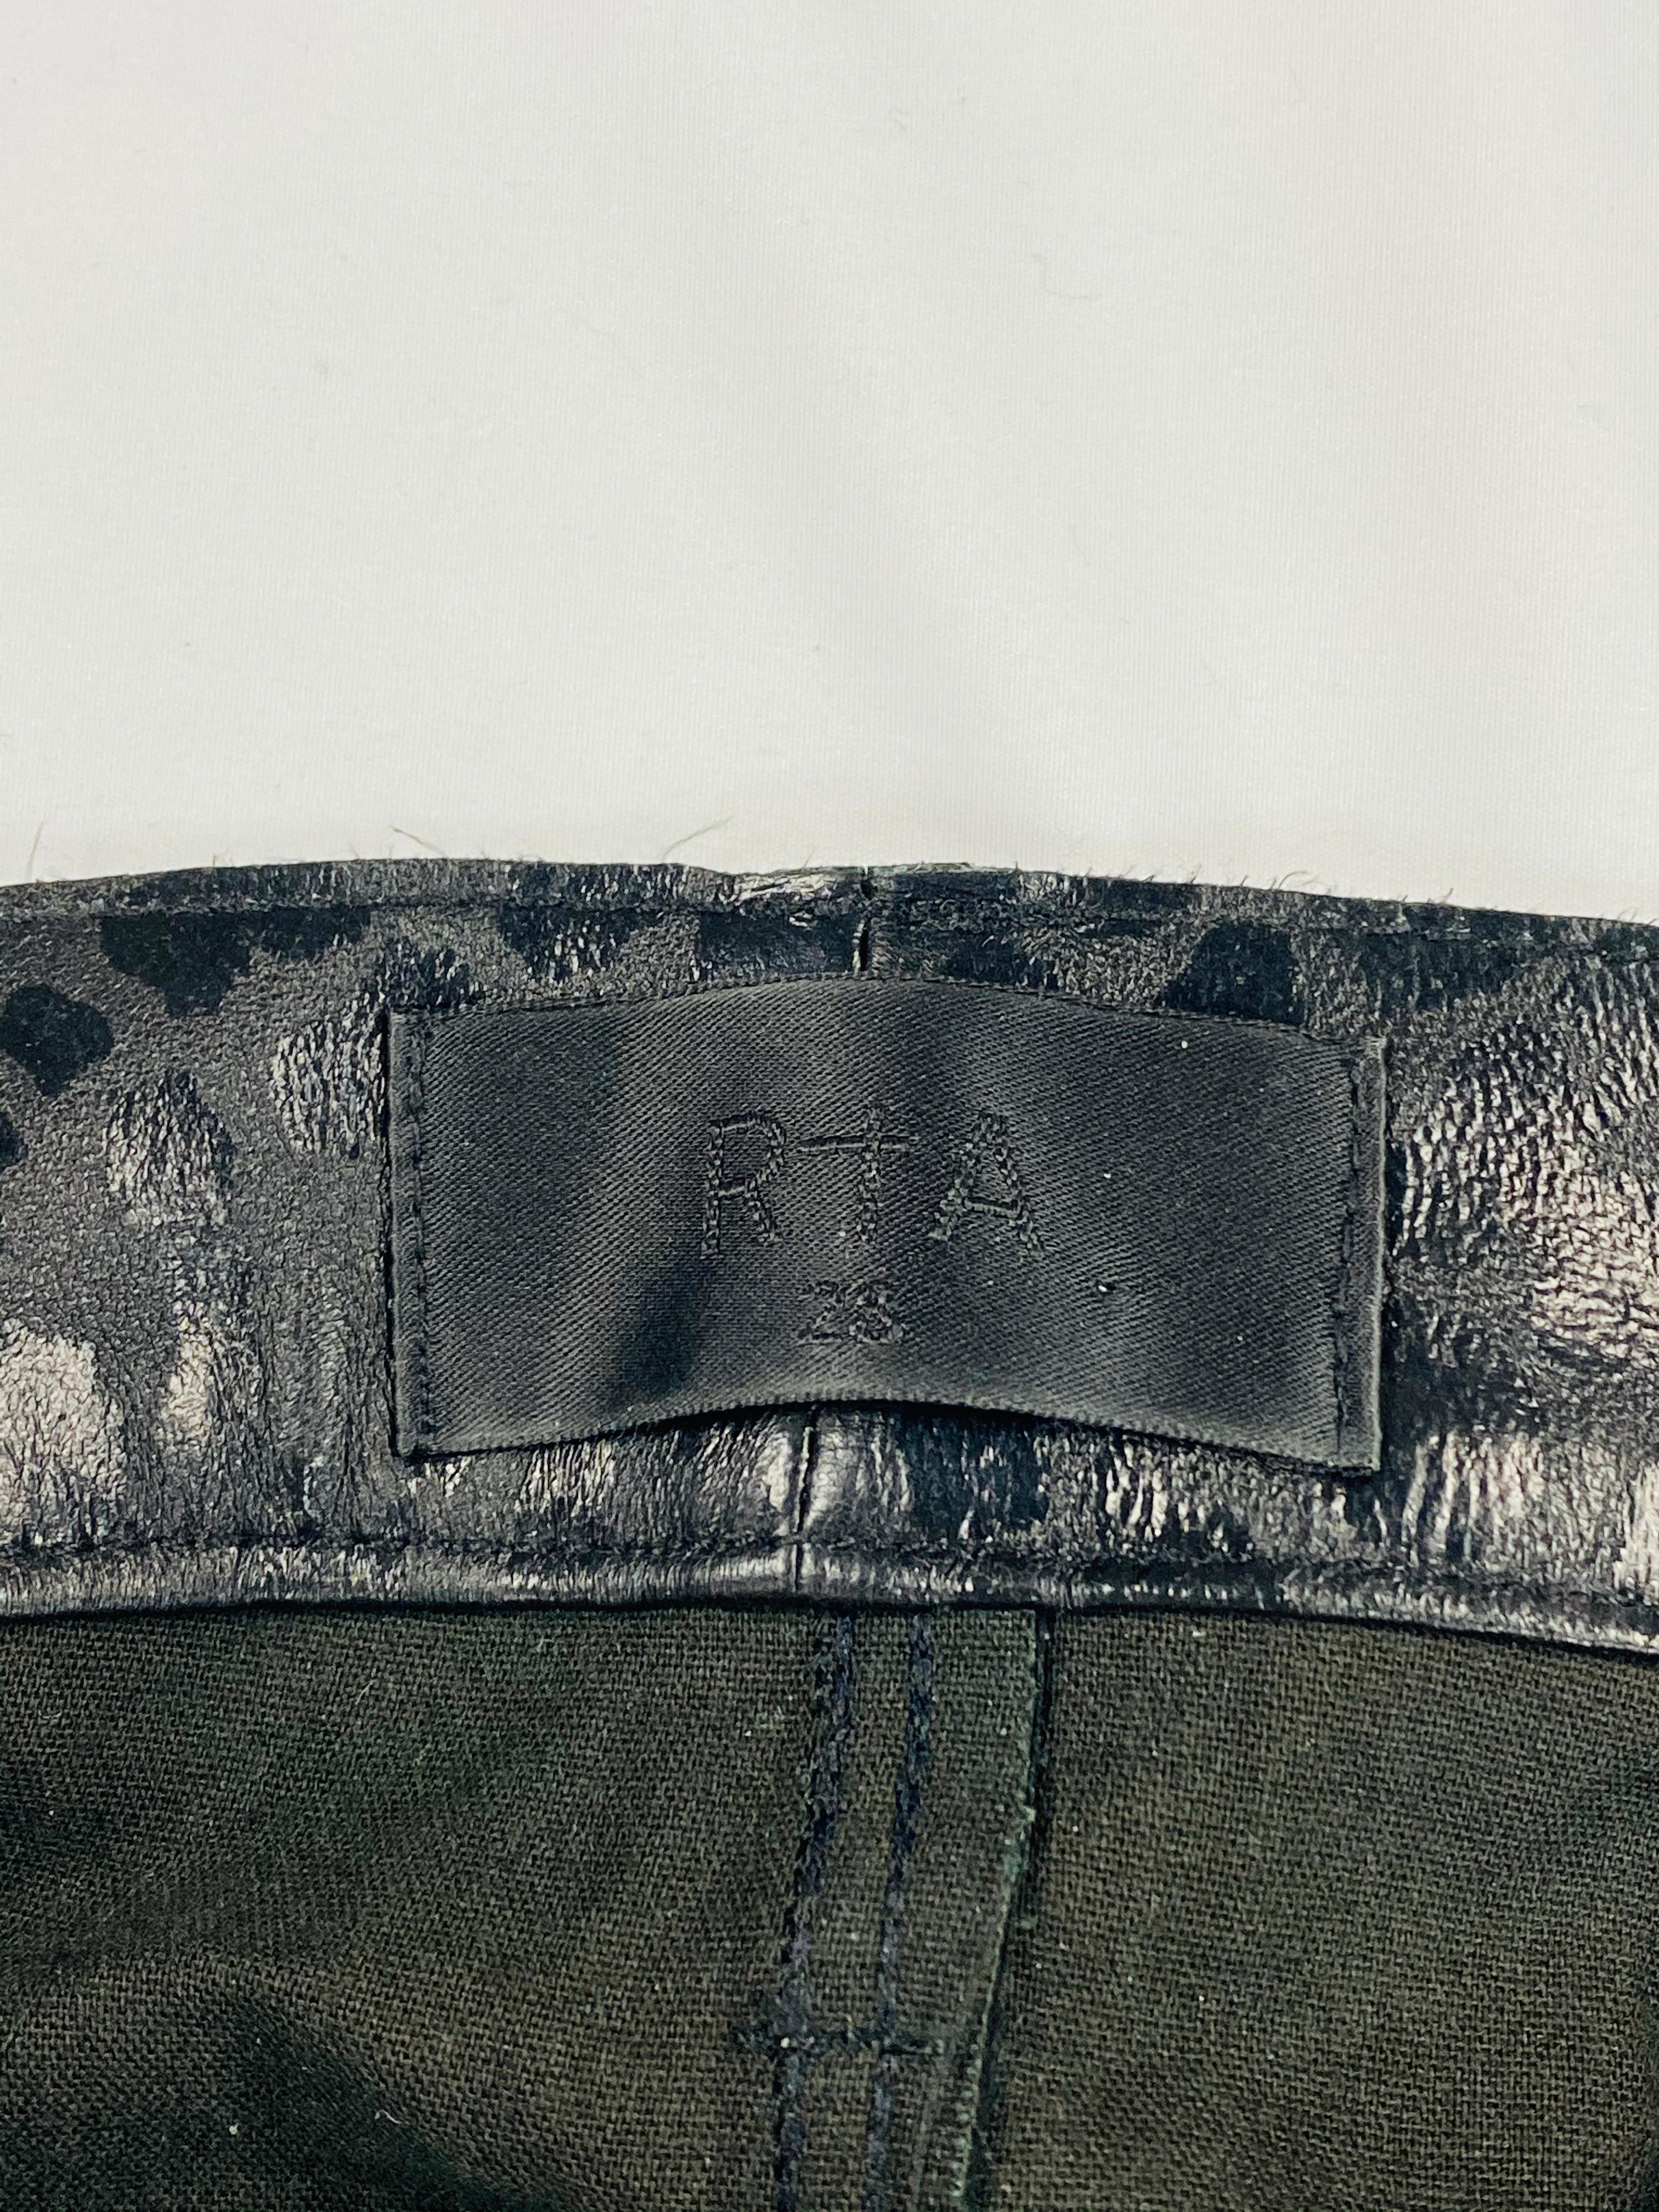 RTA Black Leather Animal Print Skinny Pants Jeans Size 28 For Sale 4